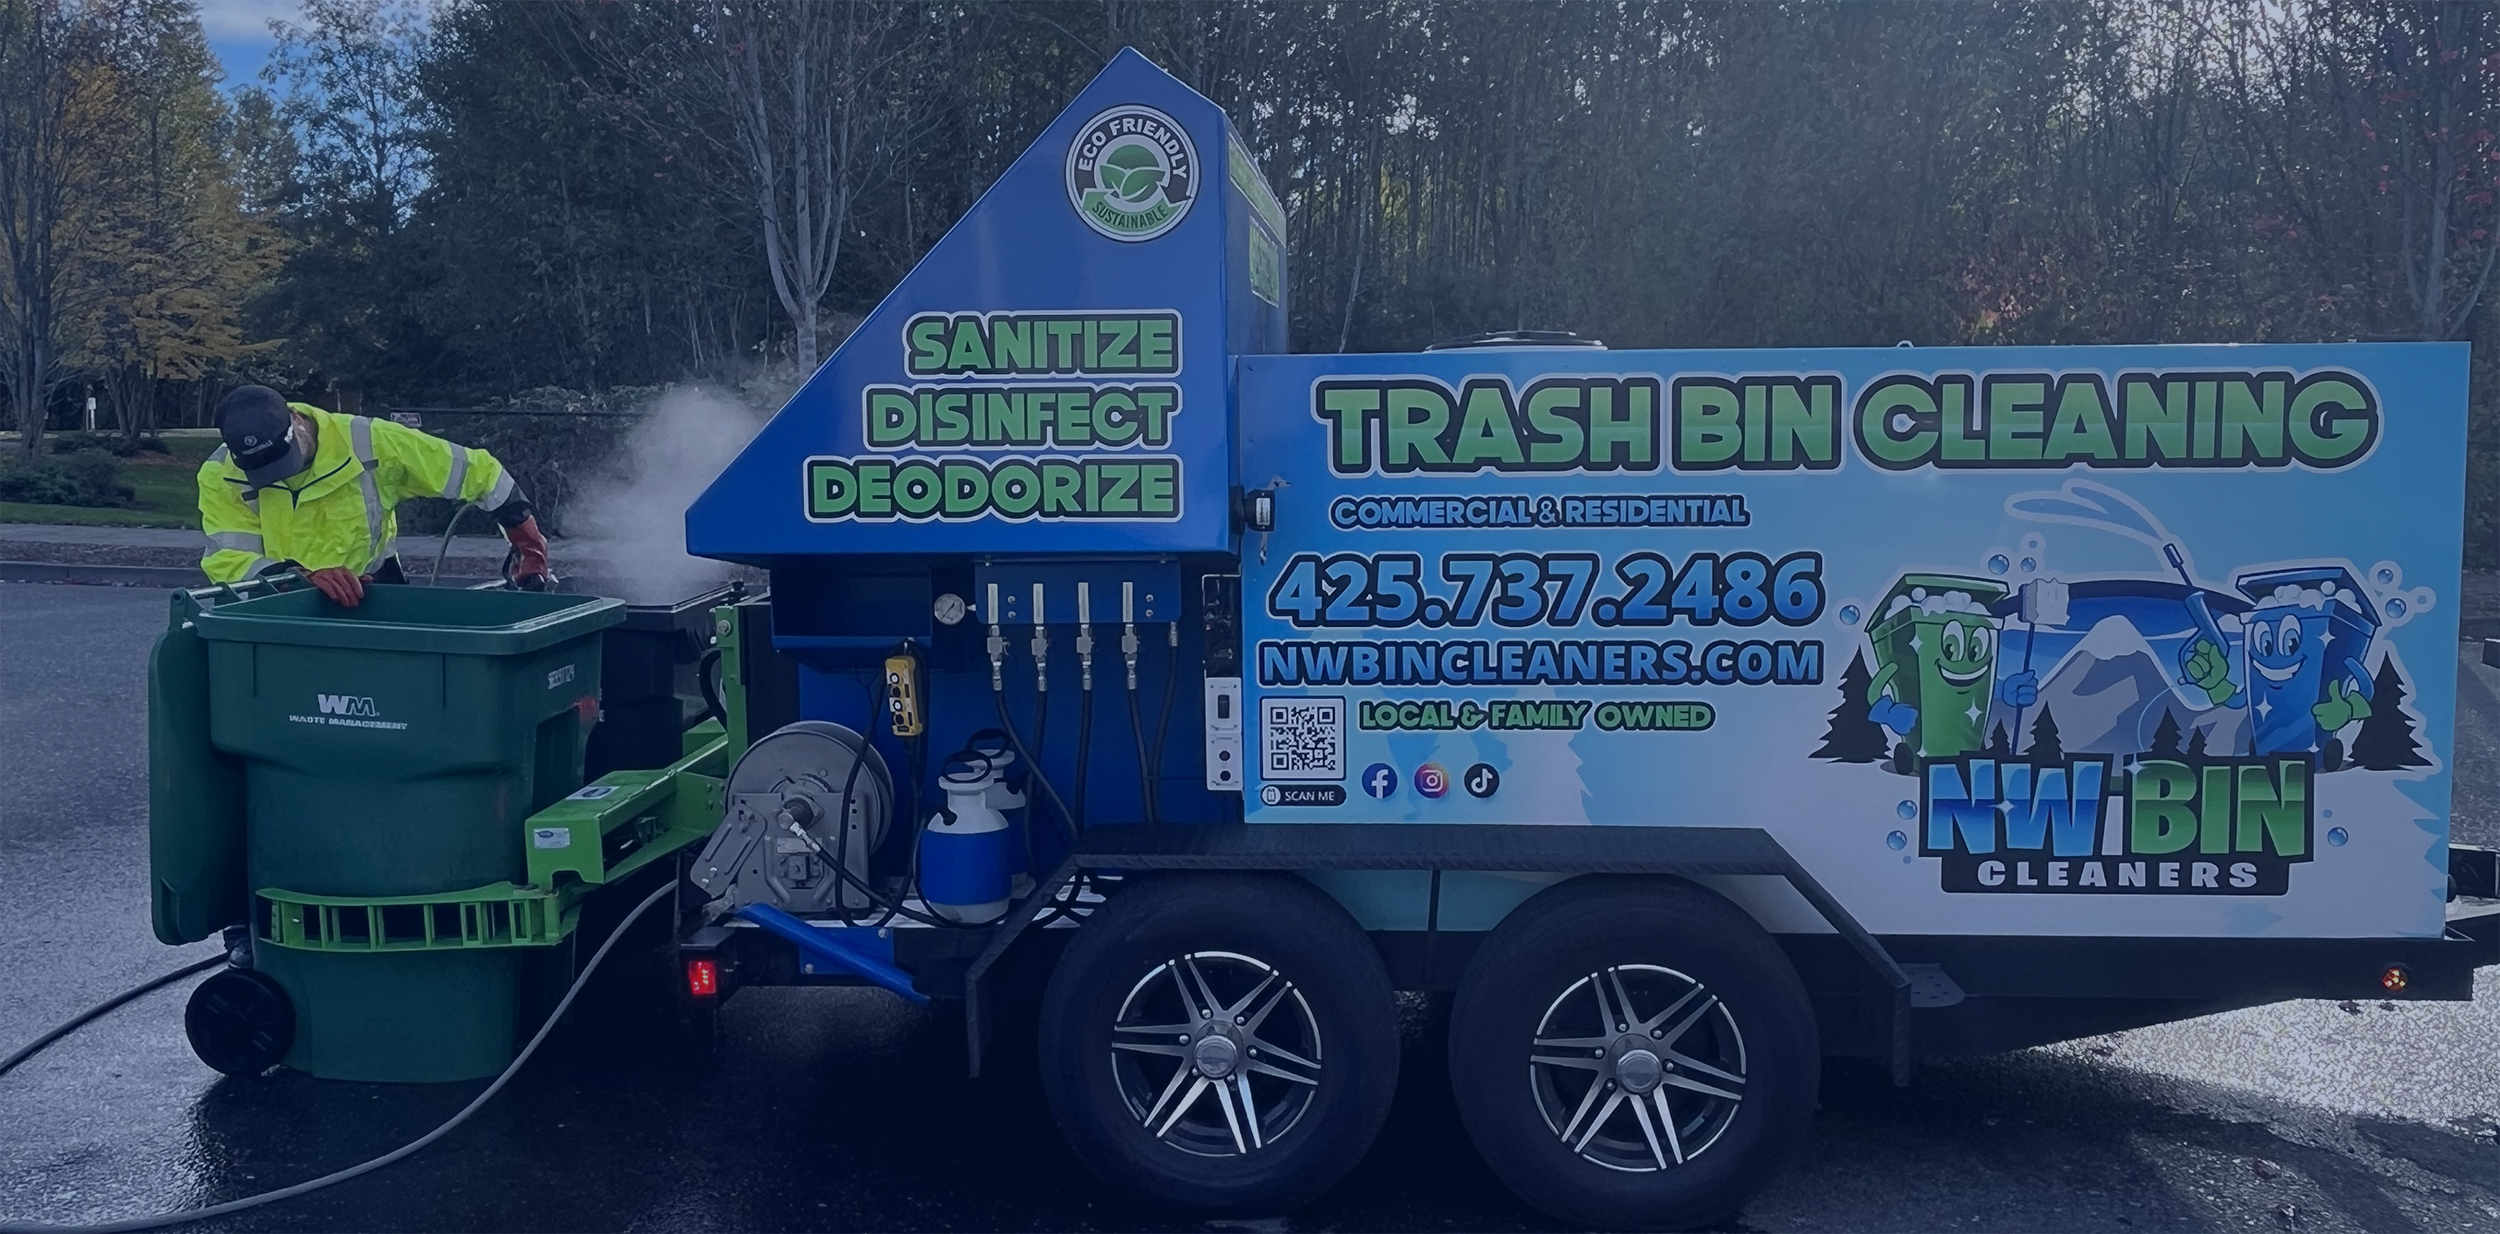 images/Snohomish-Washington-Trash-Bin-Cleaning-Services.jpg